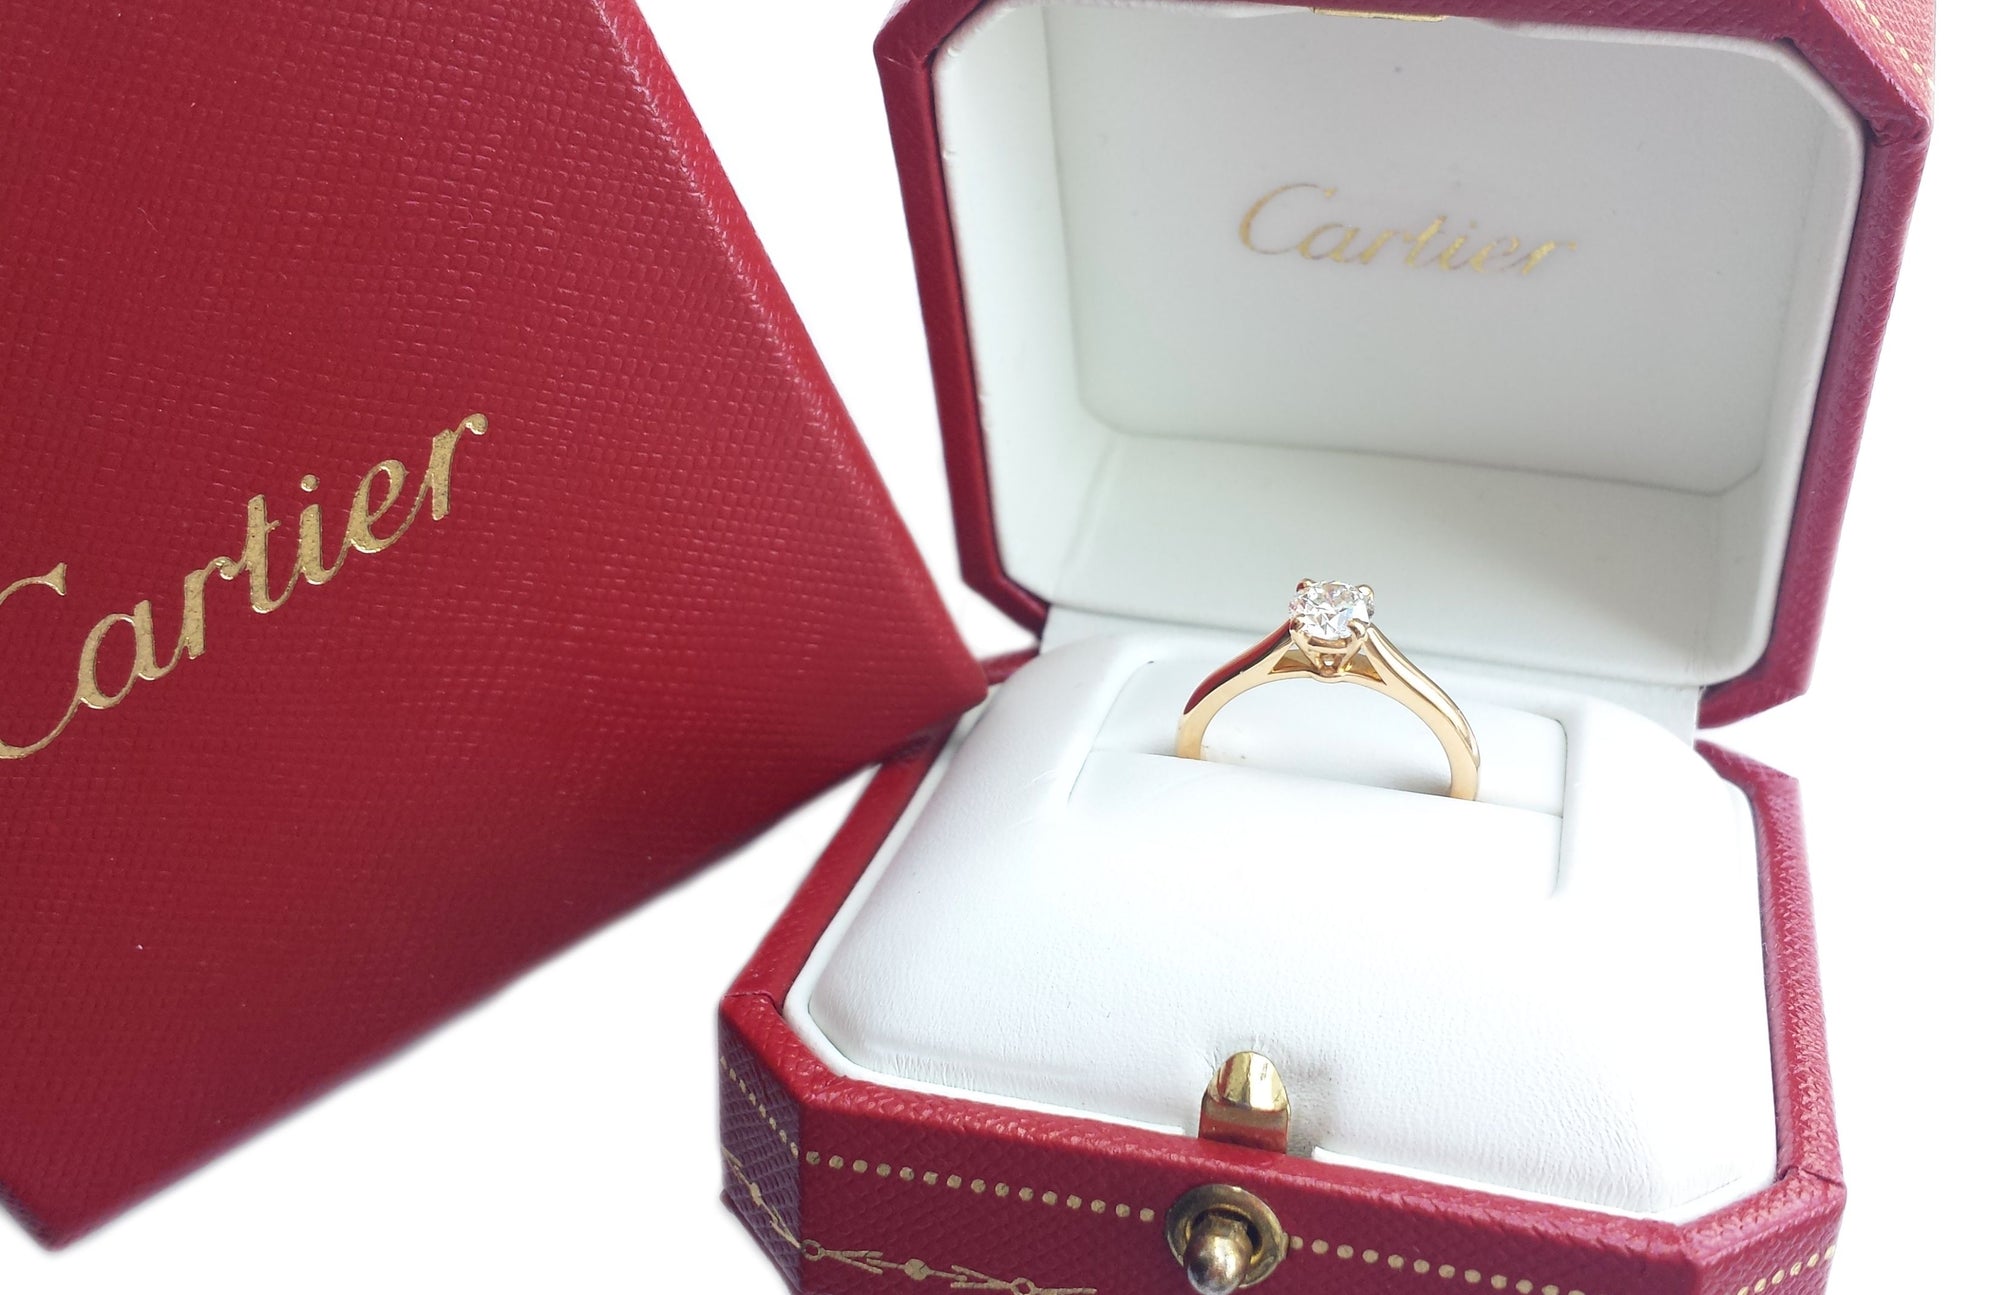 Cartier 0.56ct G/VVS1 1895 Round Brilliant Diamond Engagement Ring